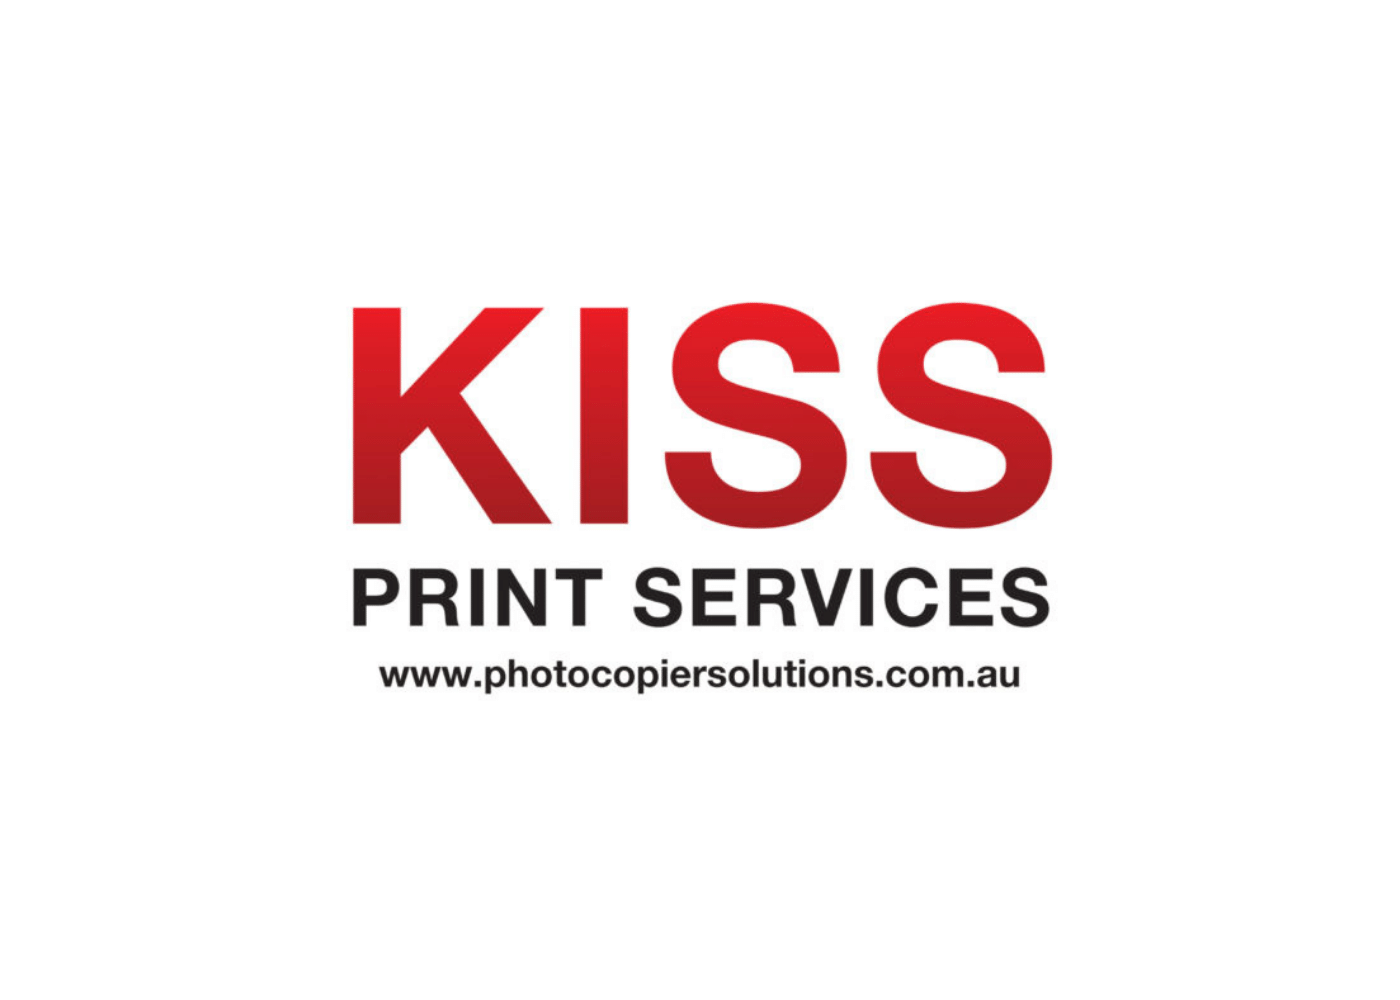 Kiss Print Services